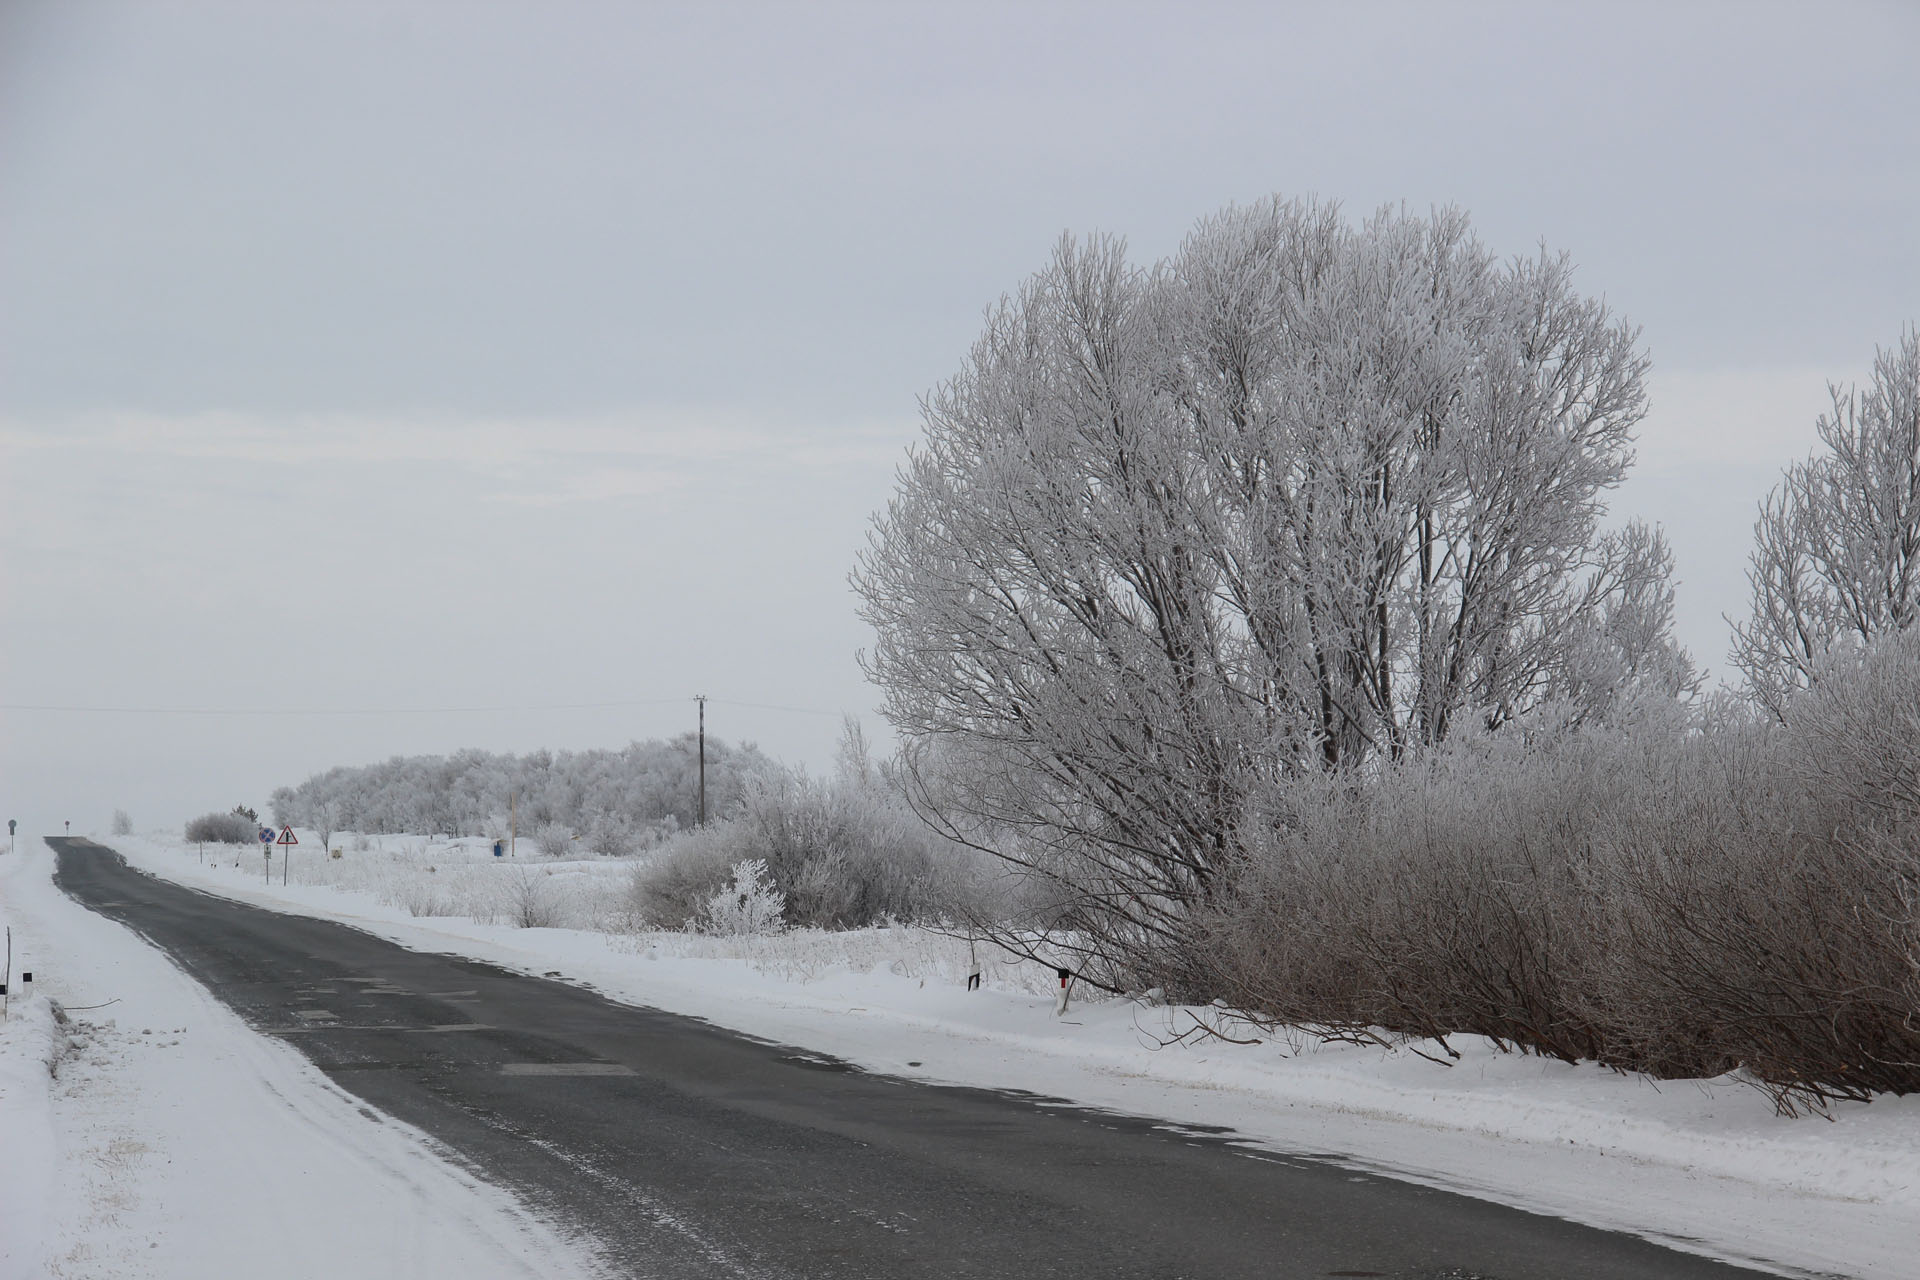 Прогноз погоды на 10 дней в карталах. Снежное утро. Село Курсавка зимой. Дороги Карталы. Погода картинки.